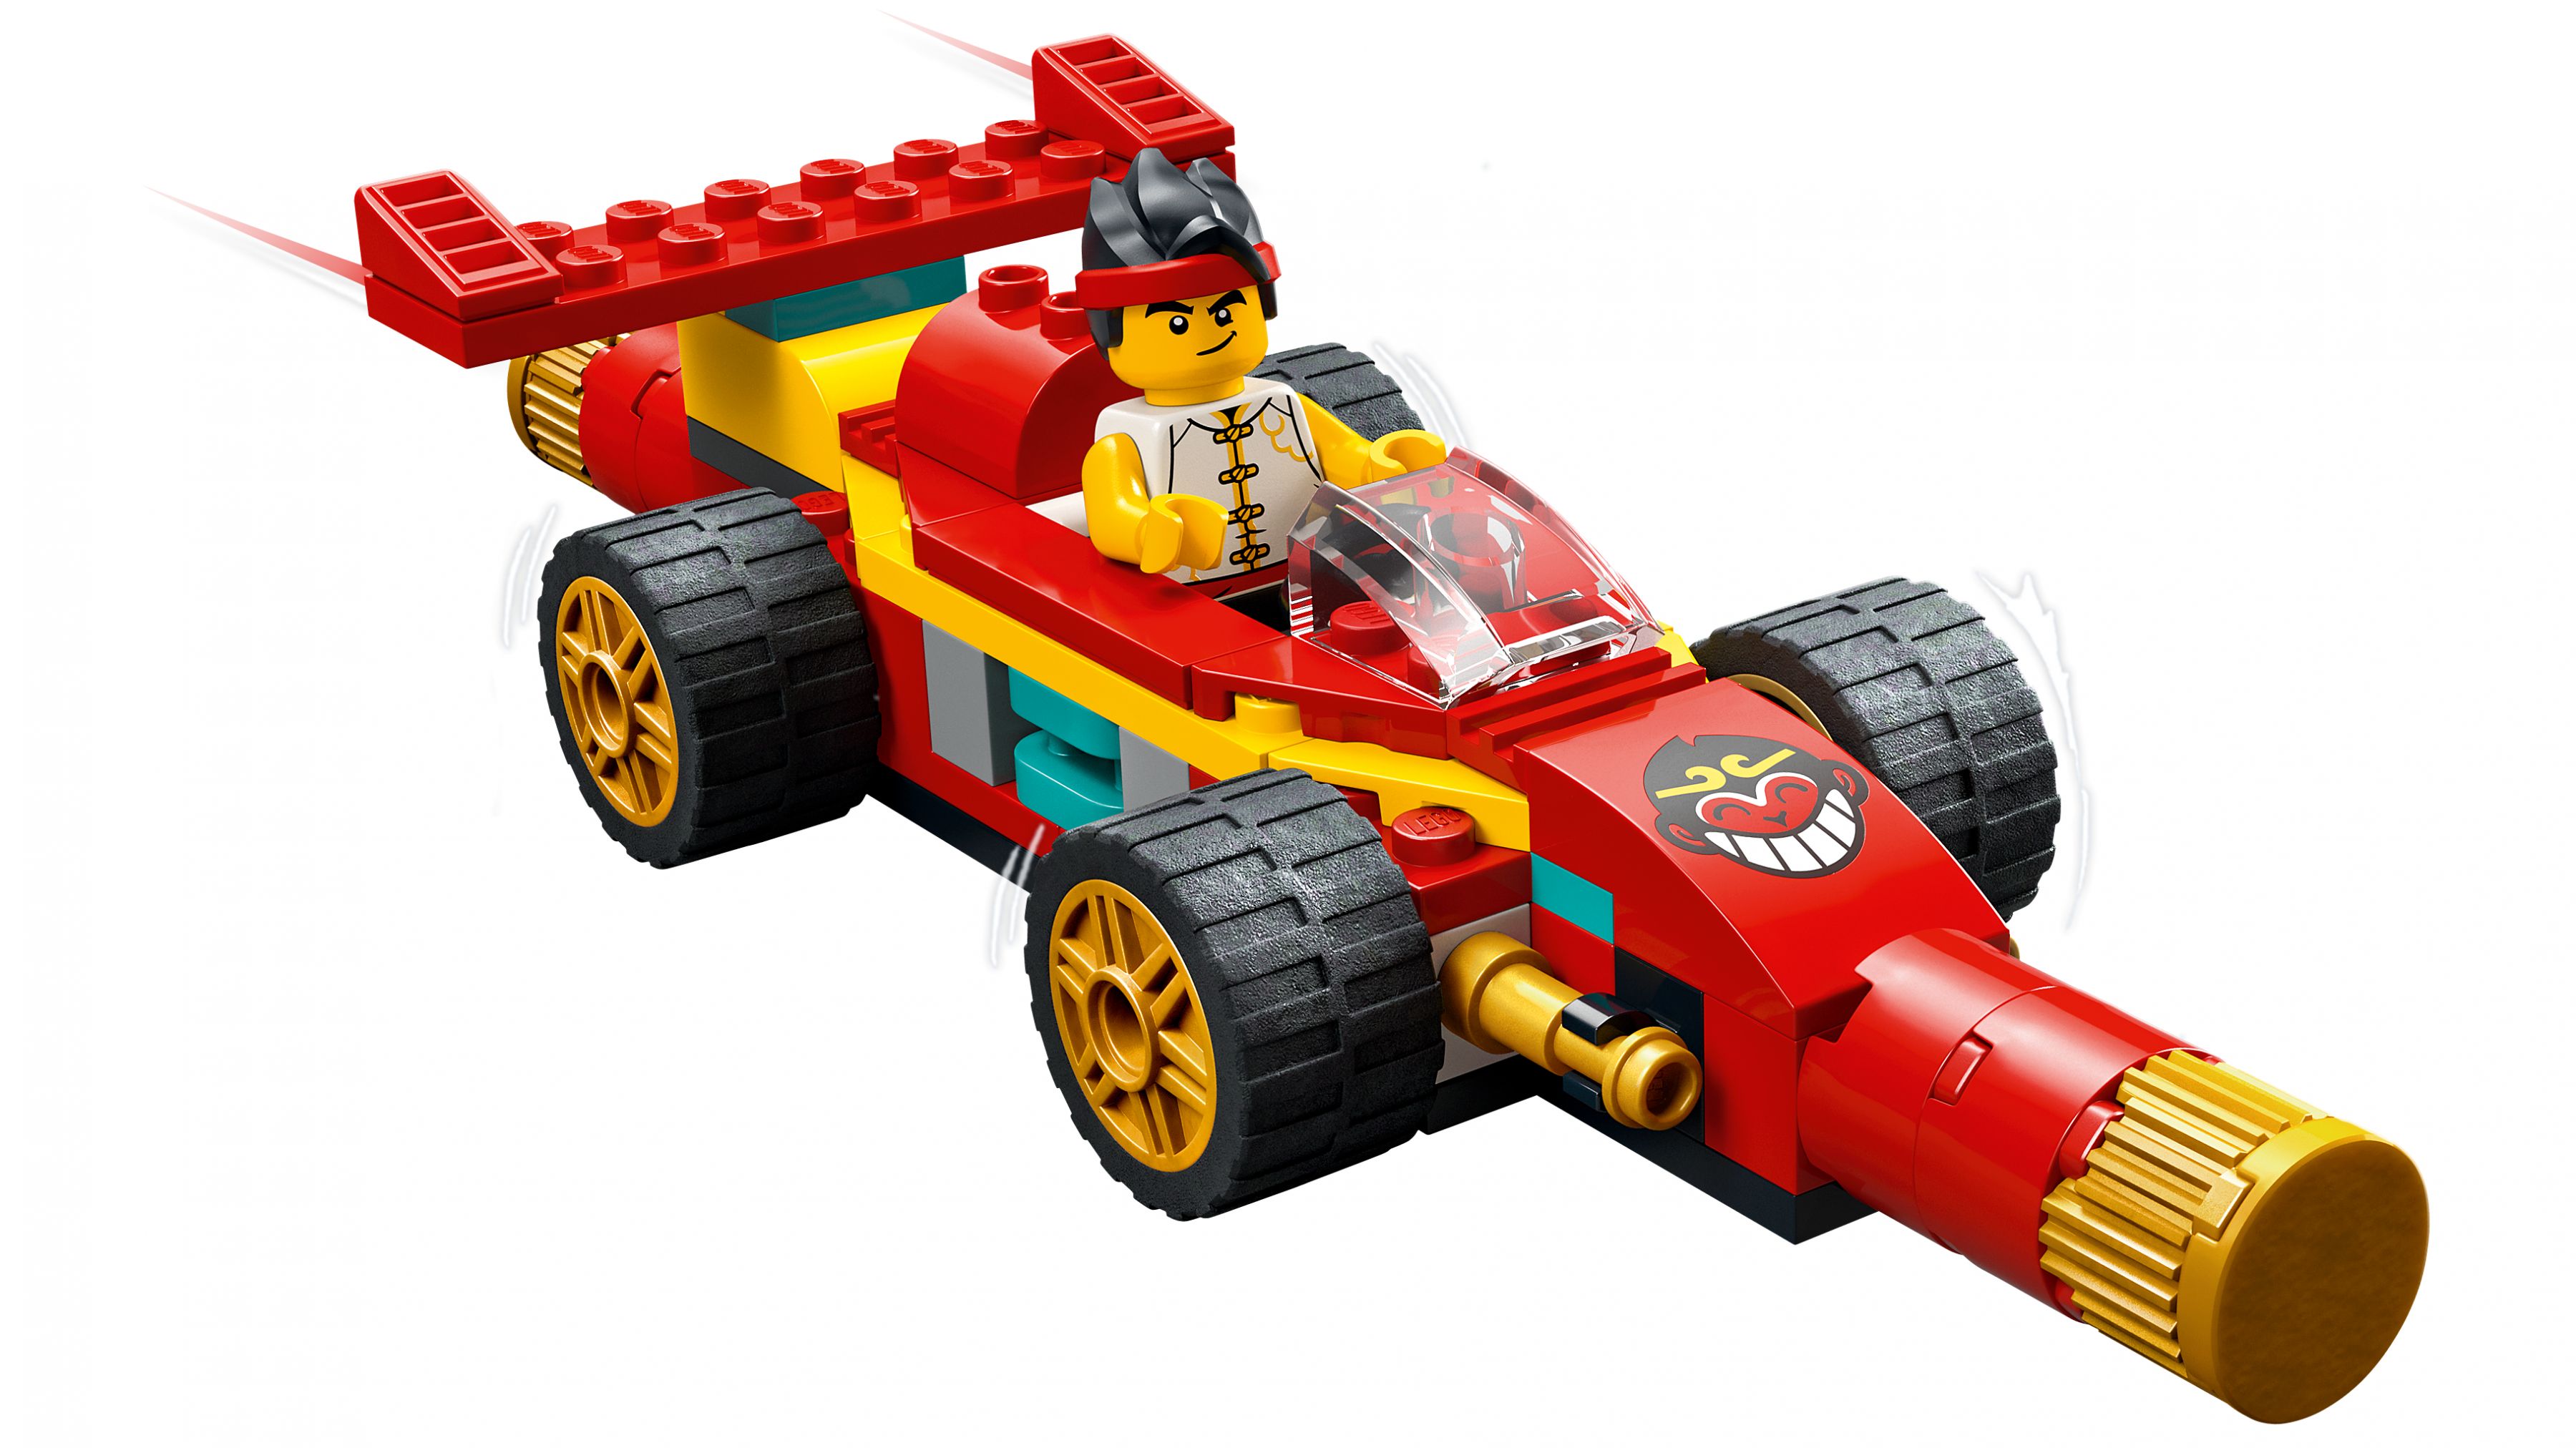 LEGO Monkie Kid 80030 Monkie Kids magische Maschinen LEGO_80030_WEB_SEC05_NOBG.jpg